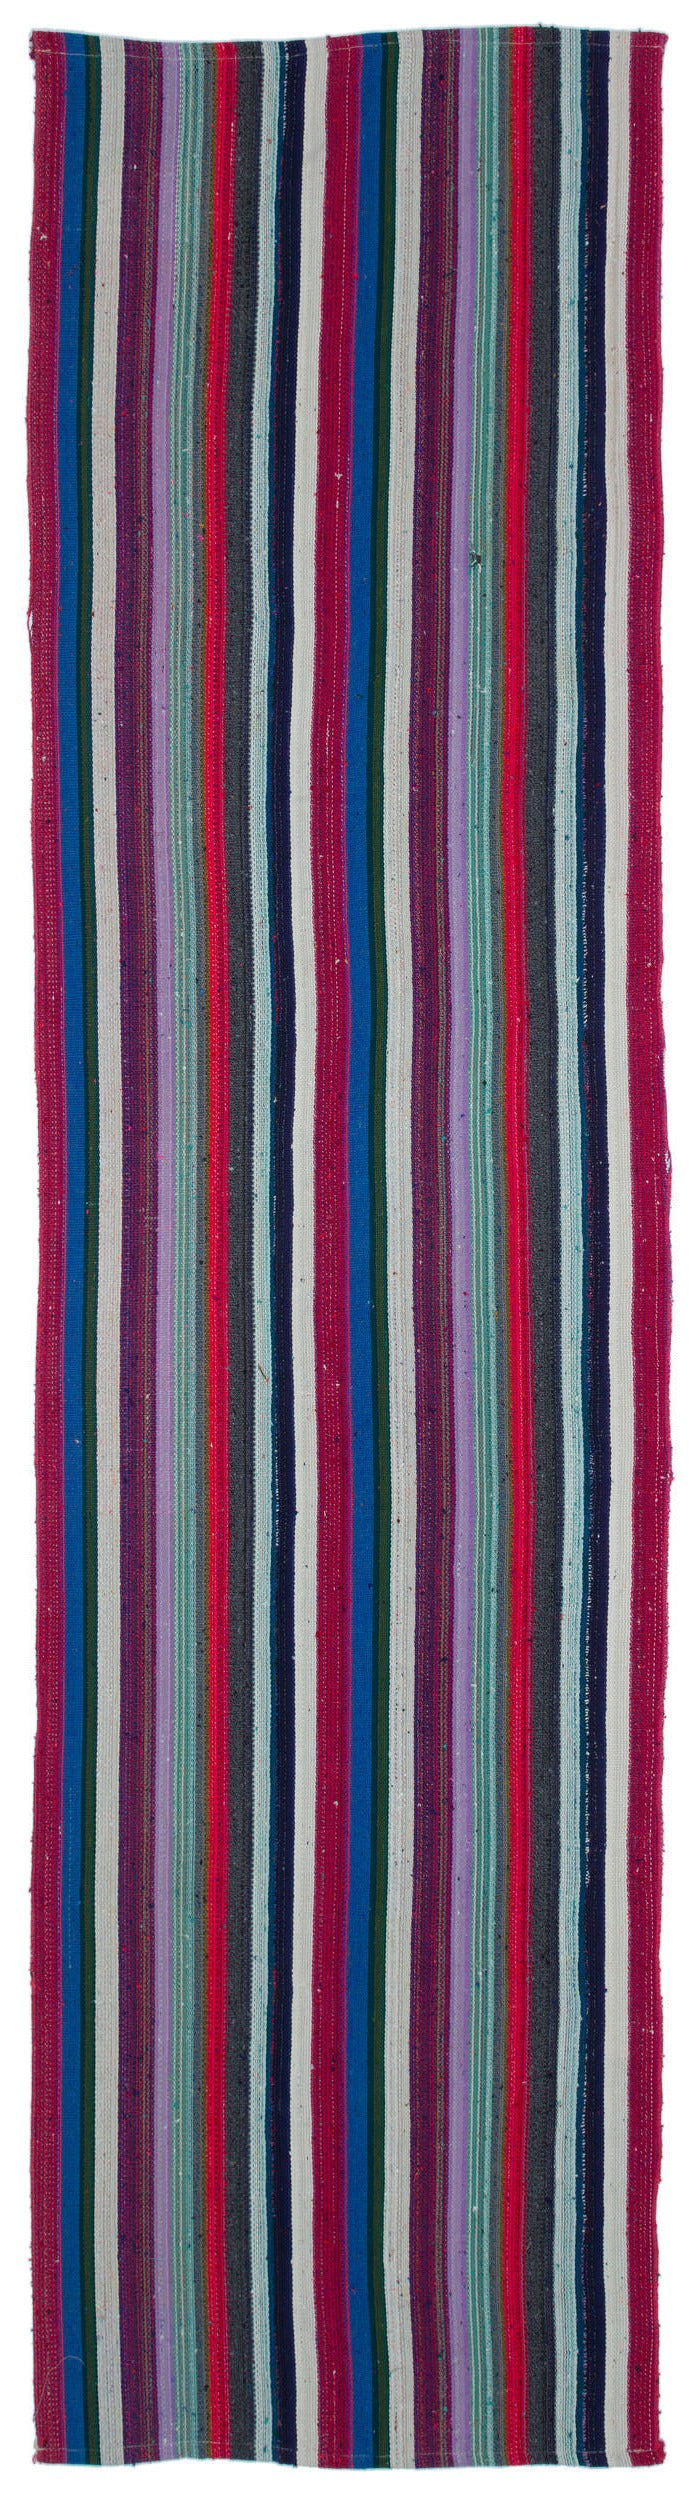 Cretan Beige Striped Wool Hand-Woven Carpet 092 x 367